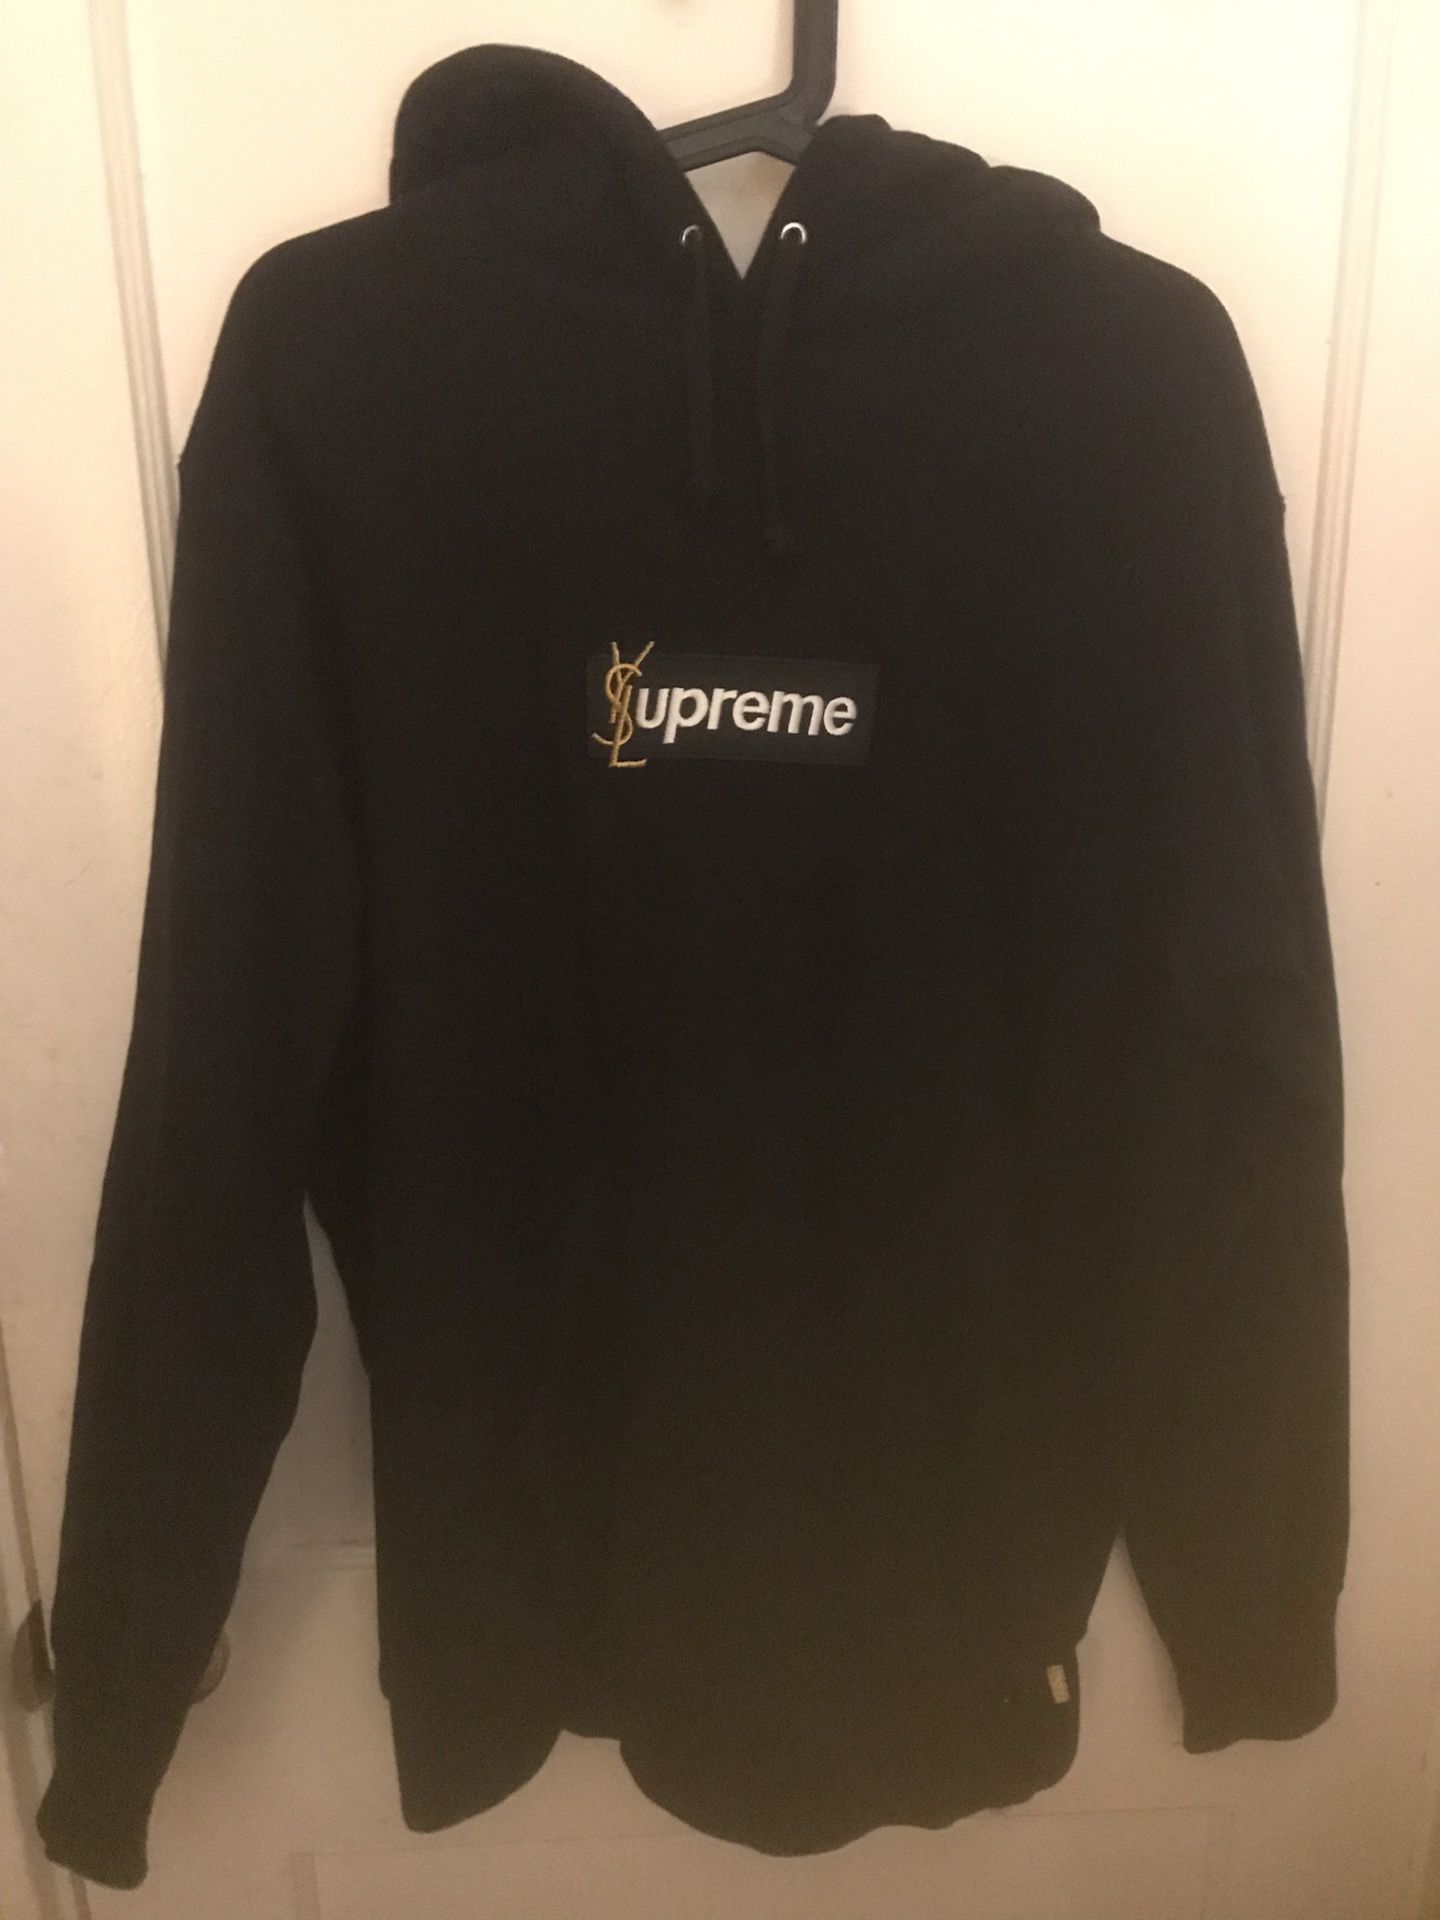 Supreme x ysl hoodie